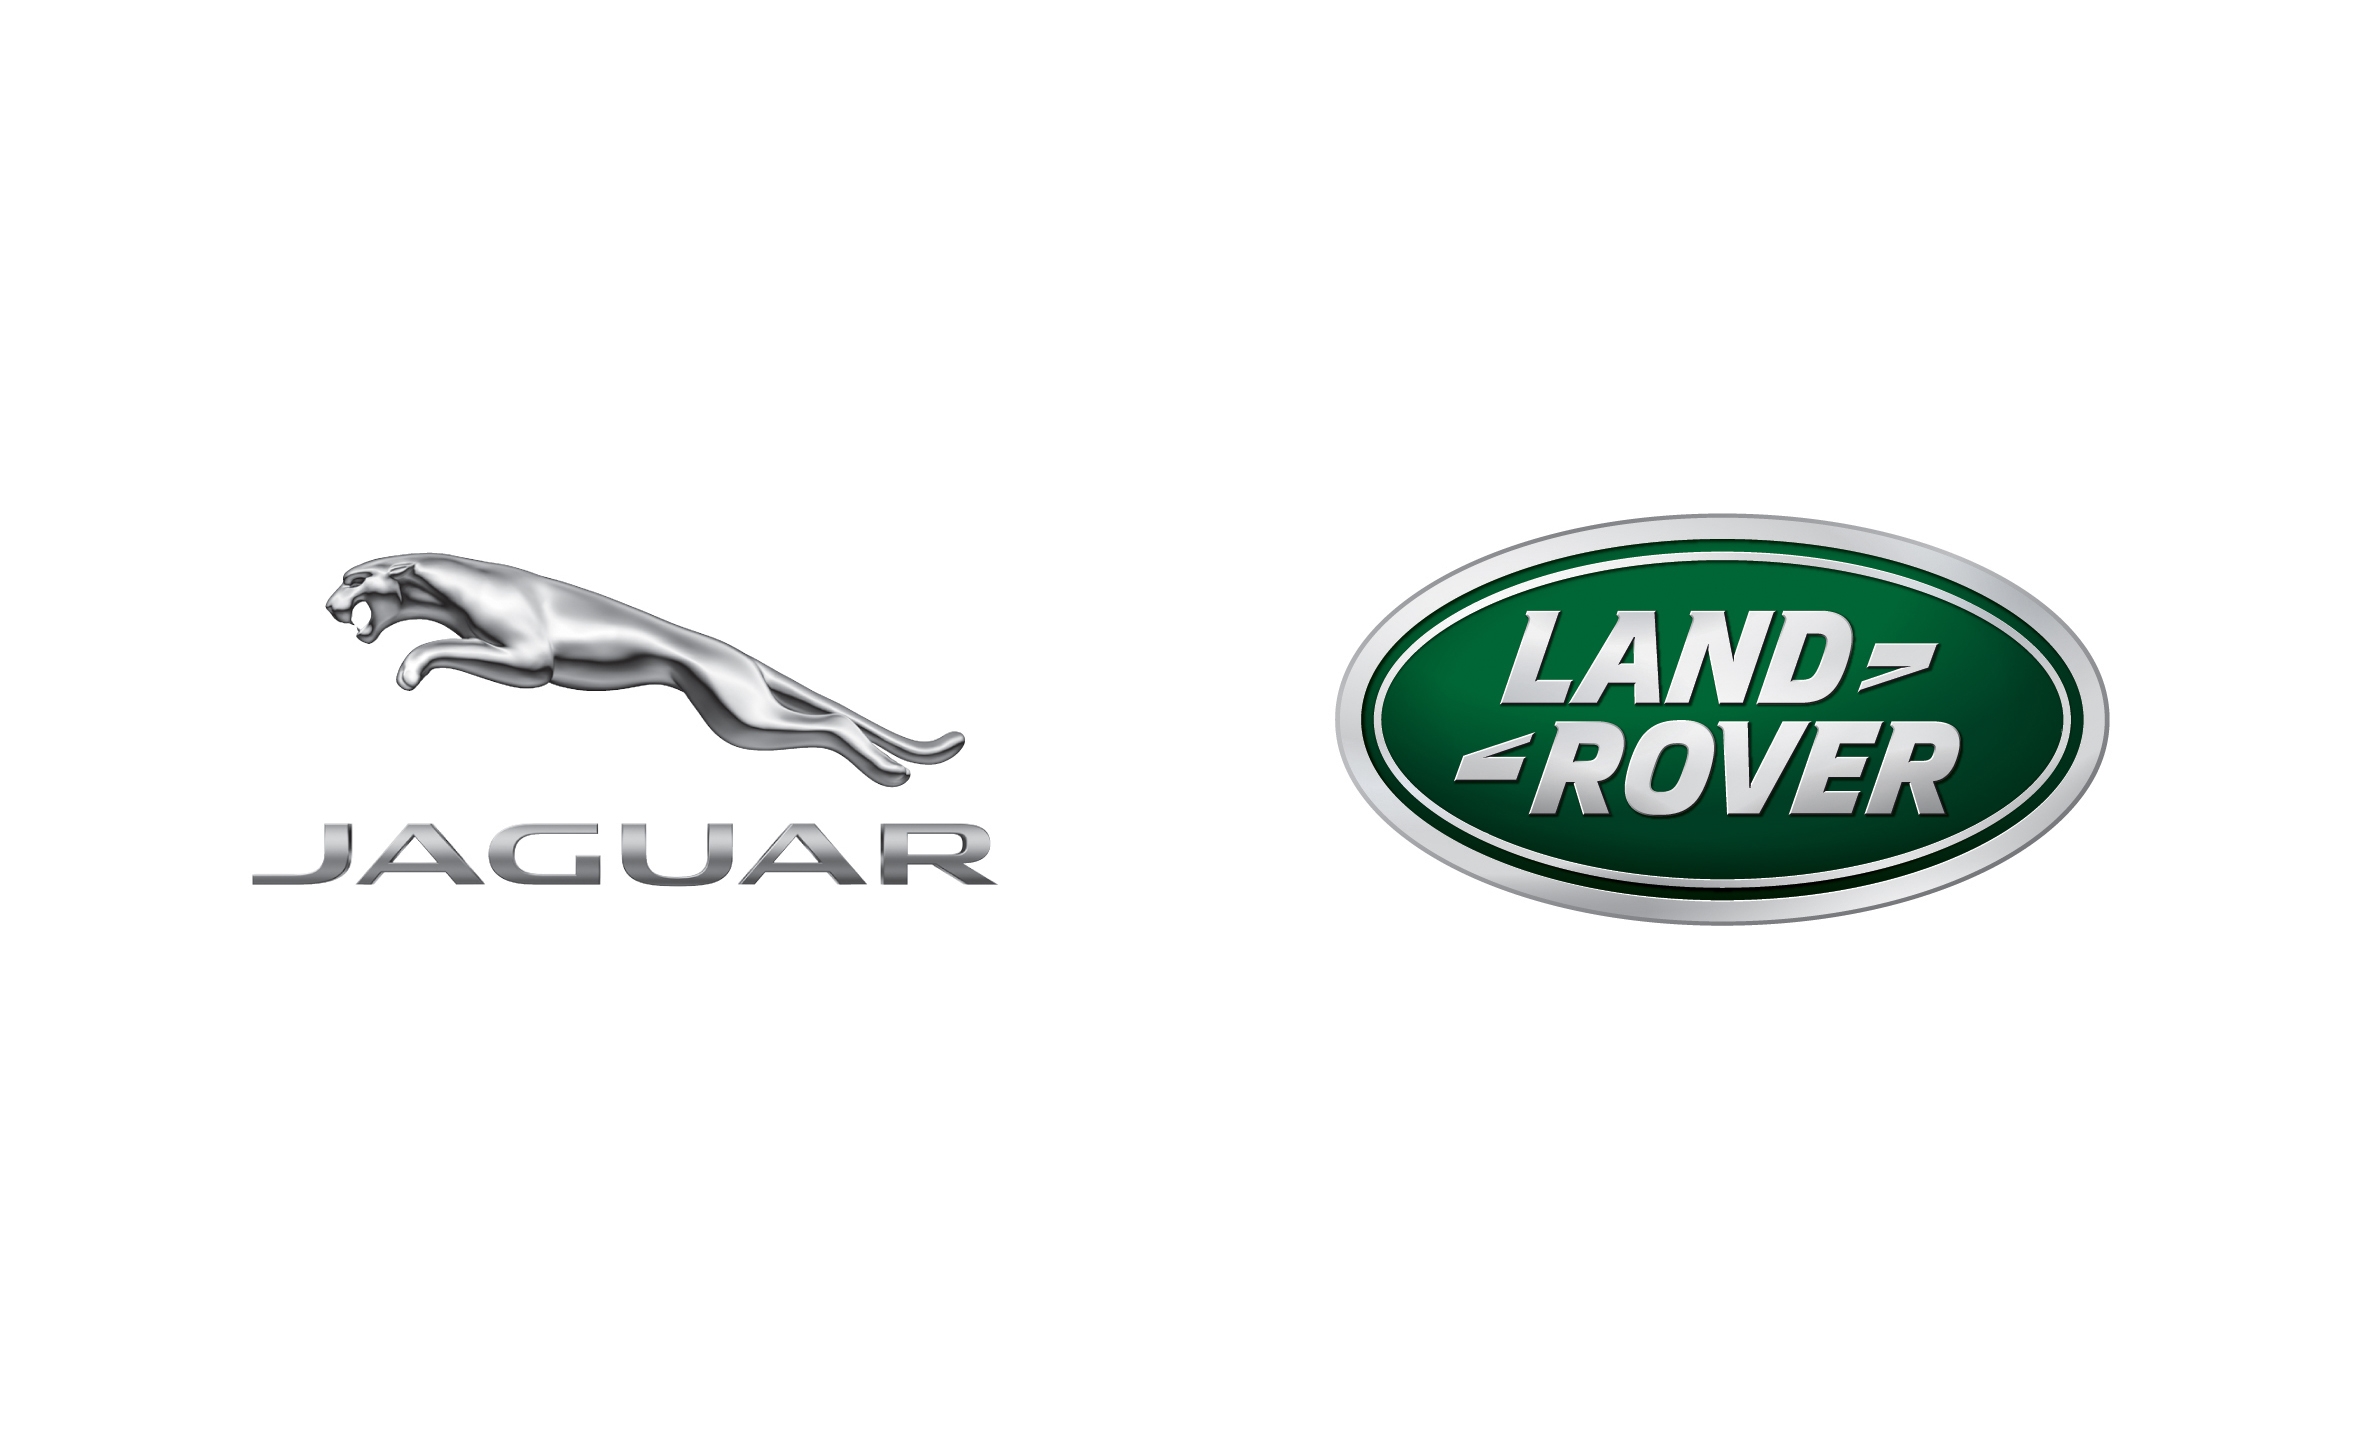 Il 2015 di Jaguar Land Rover